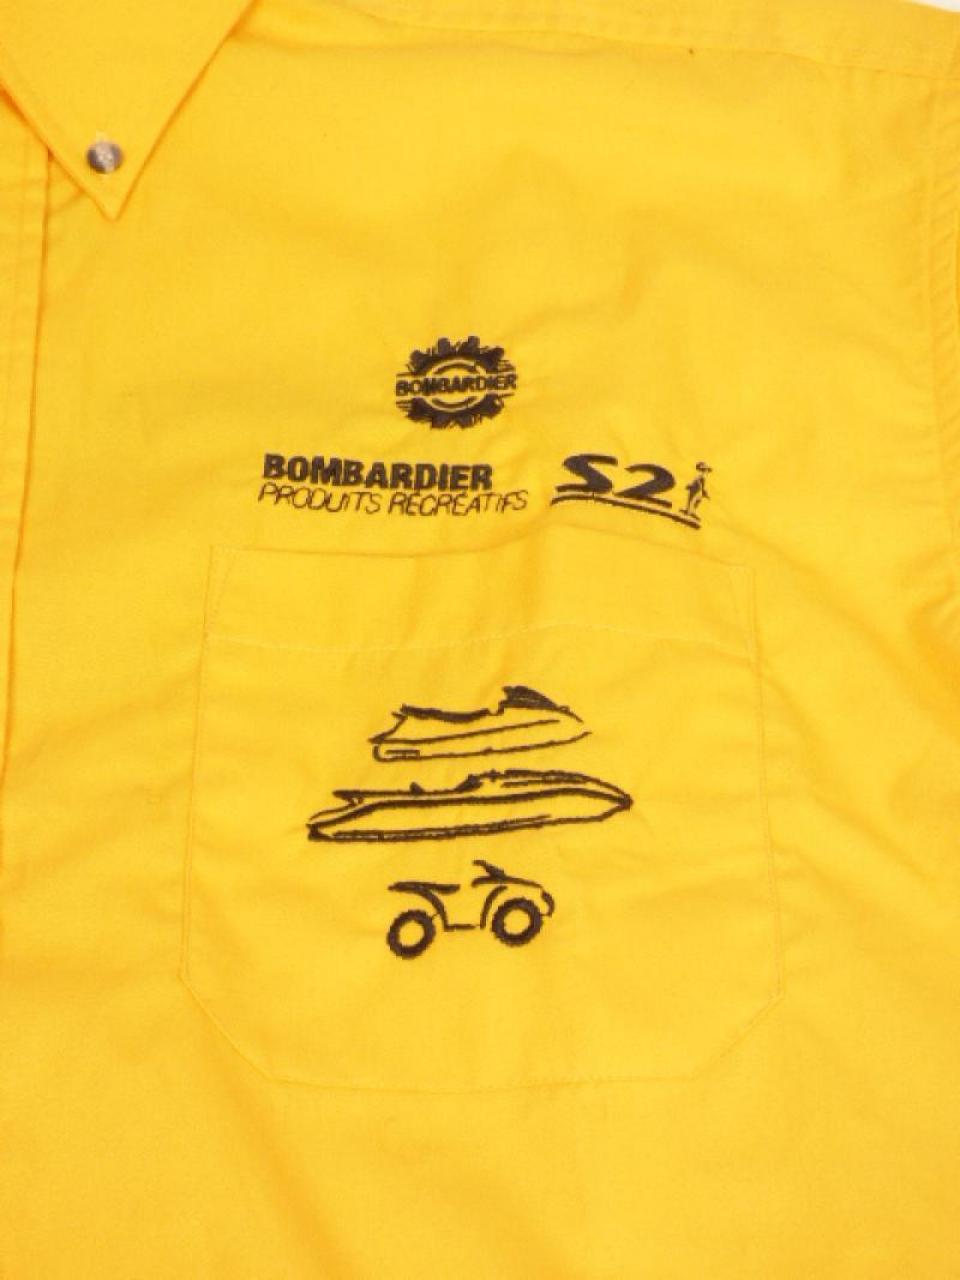 Chemise jaune Bombardier S2I homme Taille M quad pour moto scooter atv buggy Neuf